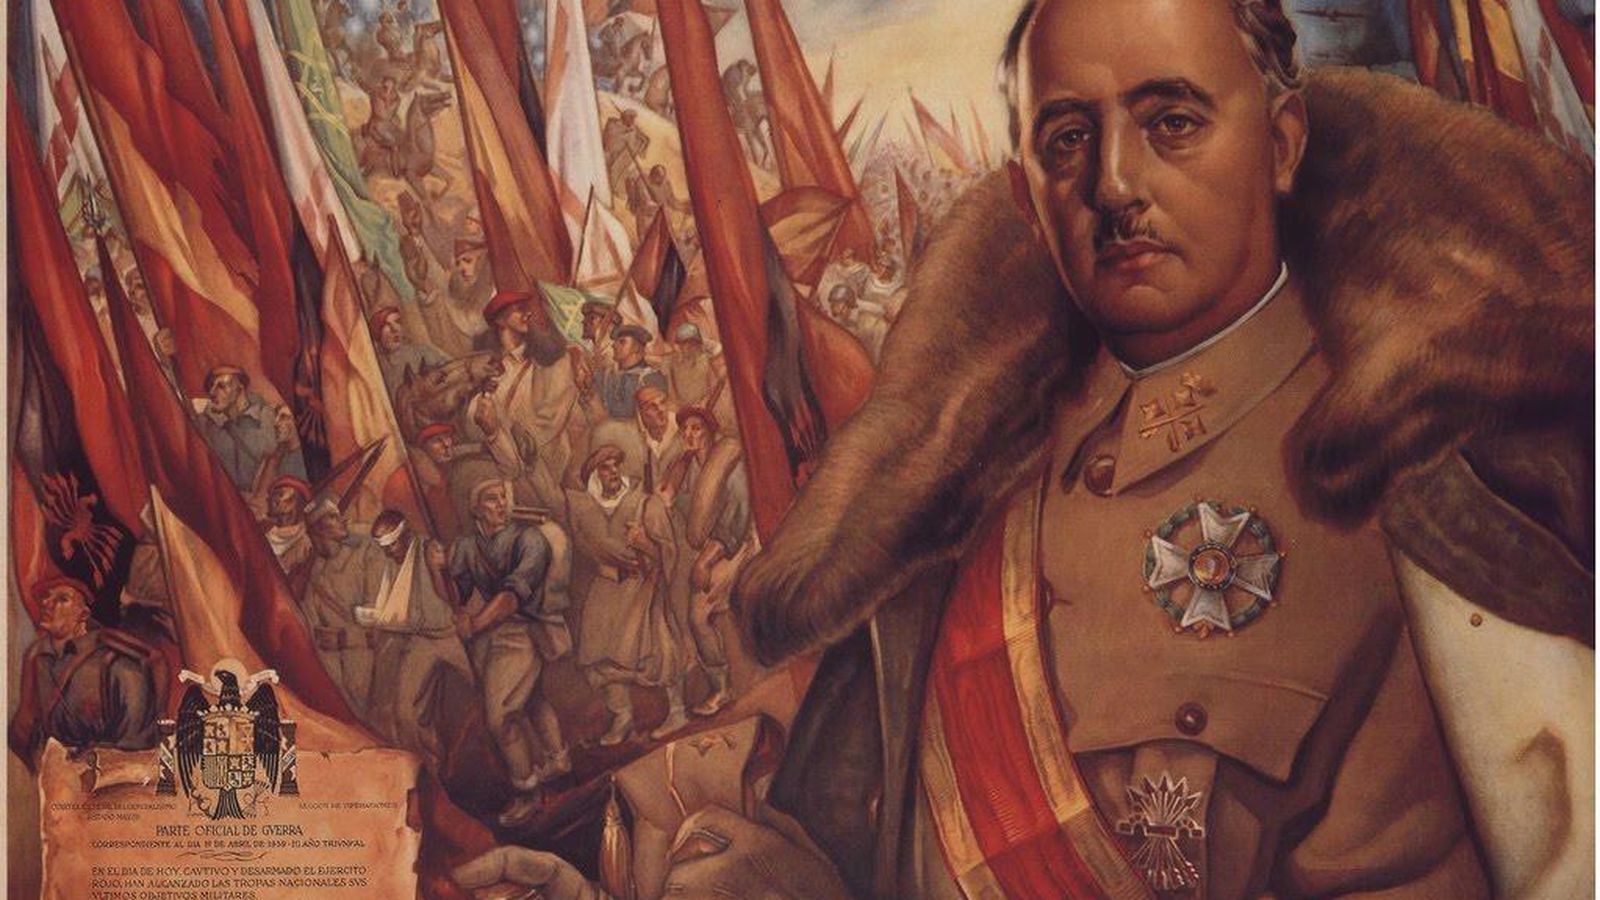 Foto: Francisco Franco